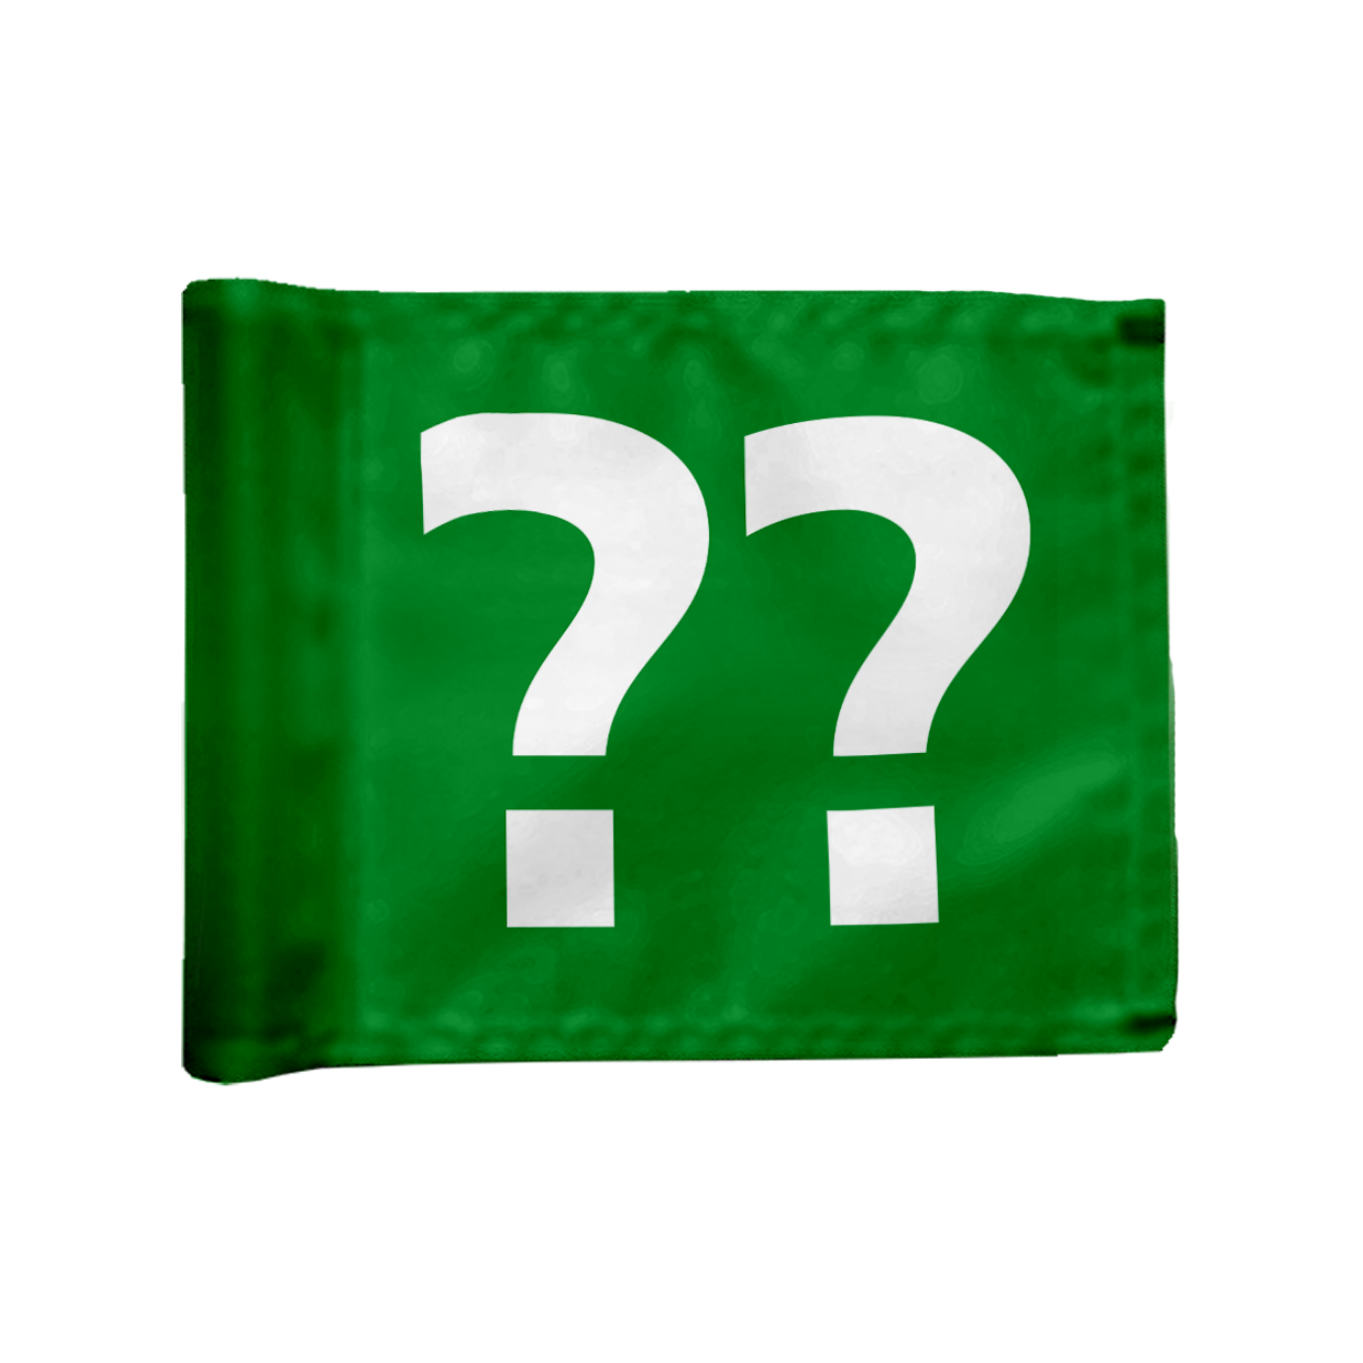 Stykvis Adventure Golf flag i grøn med valgfri hulnummer, 200 gram flagdug.